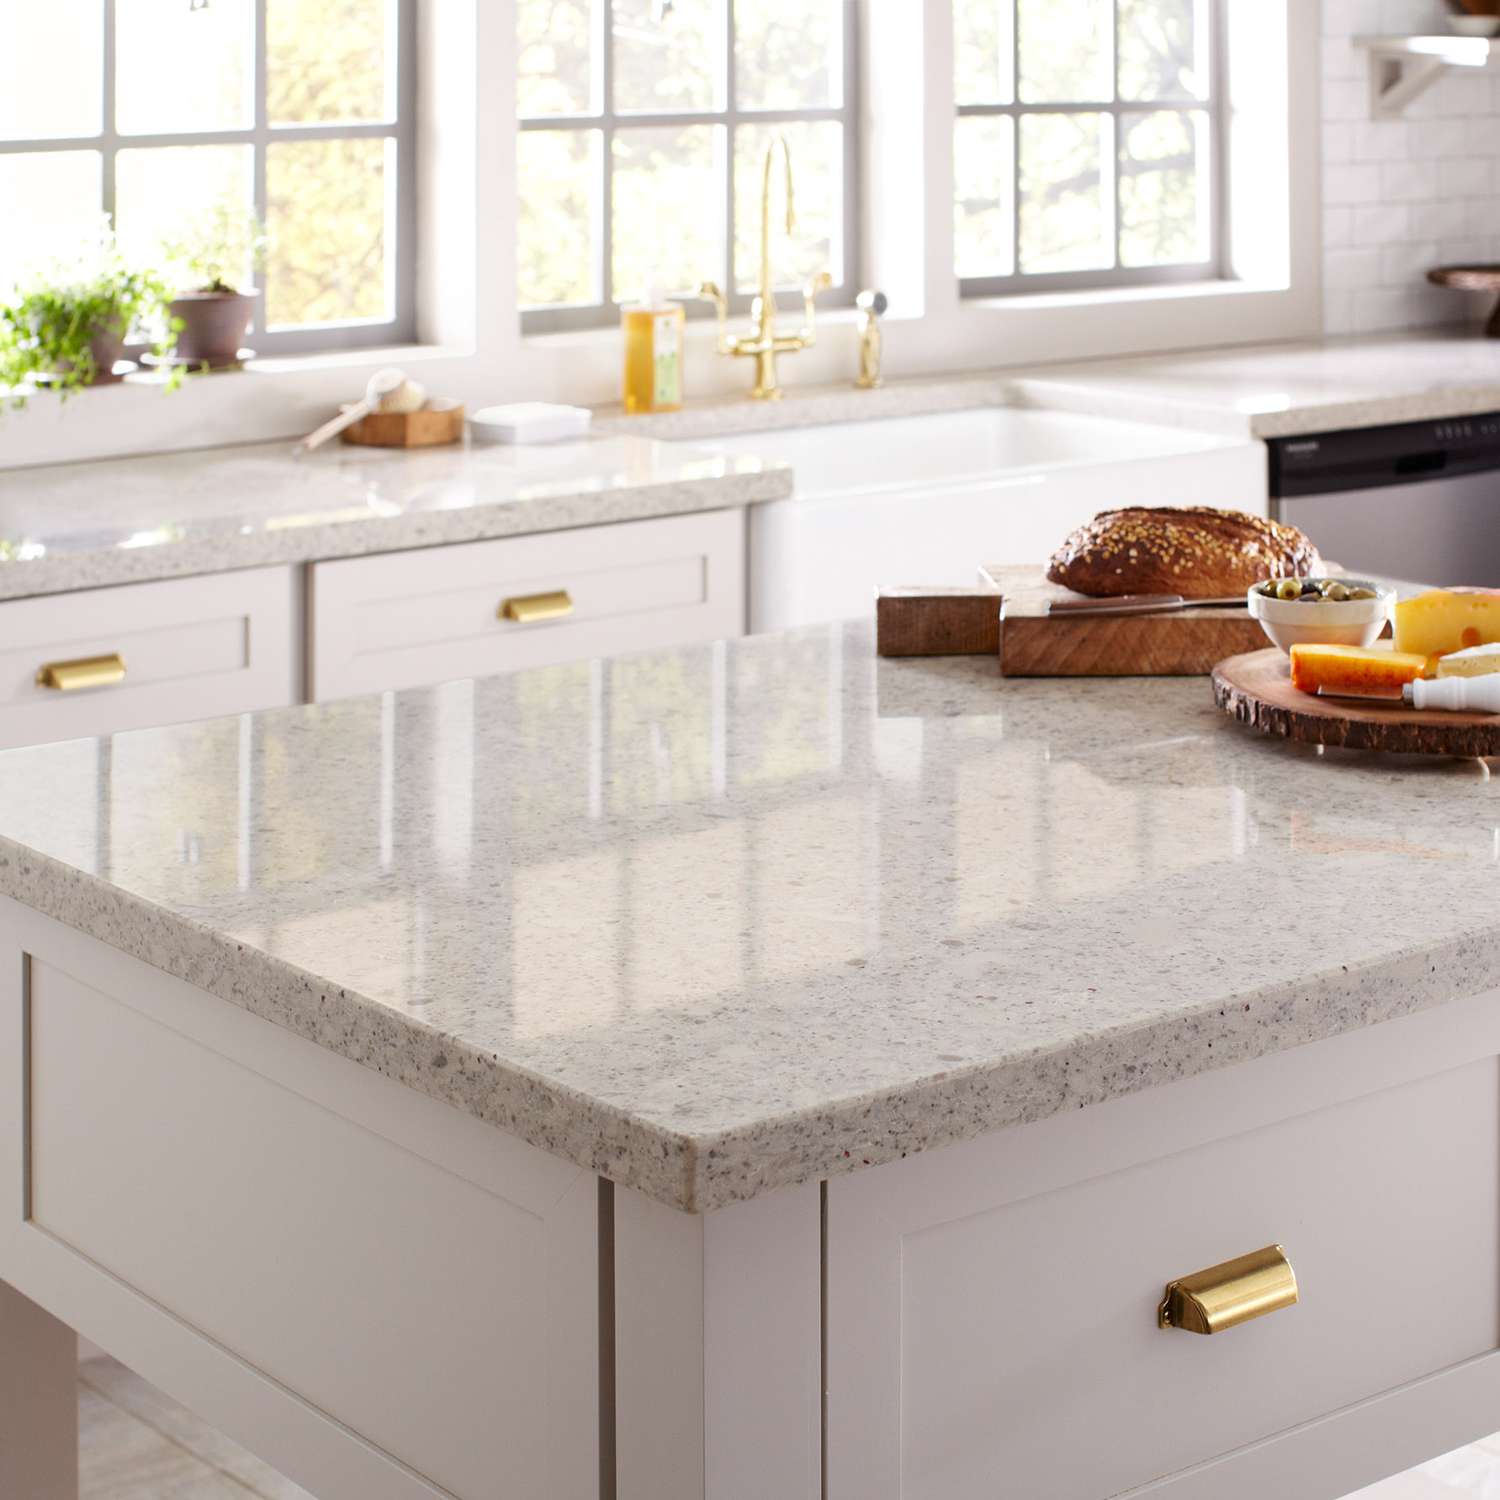 How to Choose Between Quartz or Granite Kitchen Countertops ...